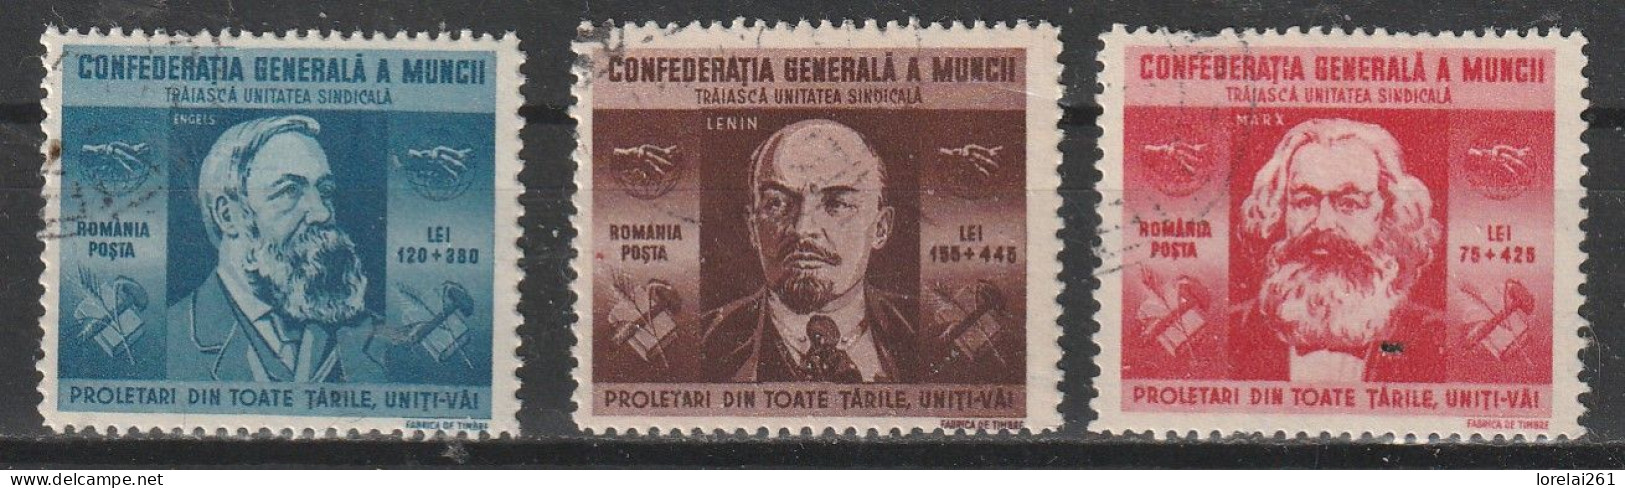 1945 - Confédération Générale Du Travail Mi No 861/863 - Usado